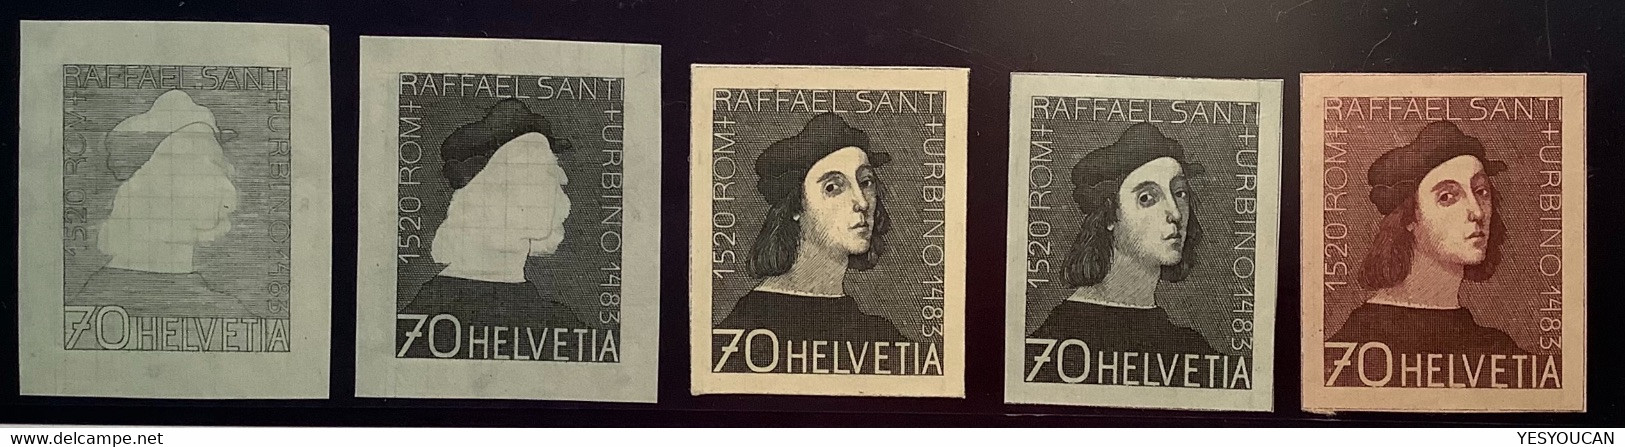 Schweiz1946 BICKEL ESSAY "RAFFAEL SANTI"1483-1520 Raphael Italian Renaissance Painter&architect(Art Vatican Architecture - Ongebruikt